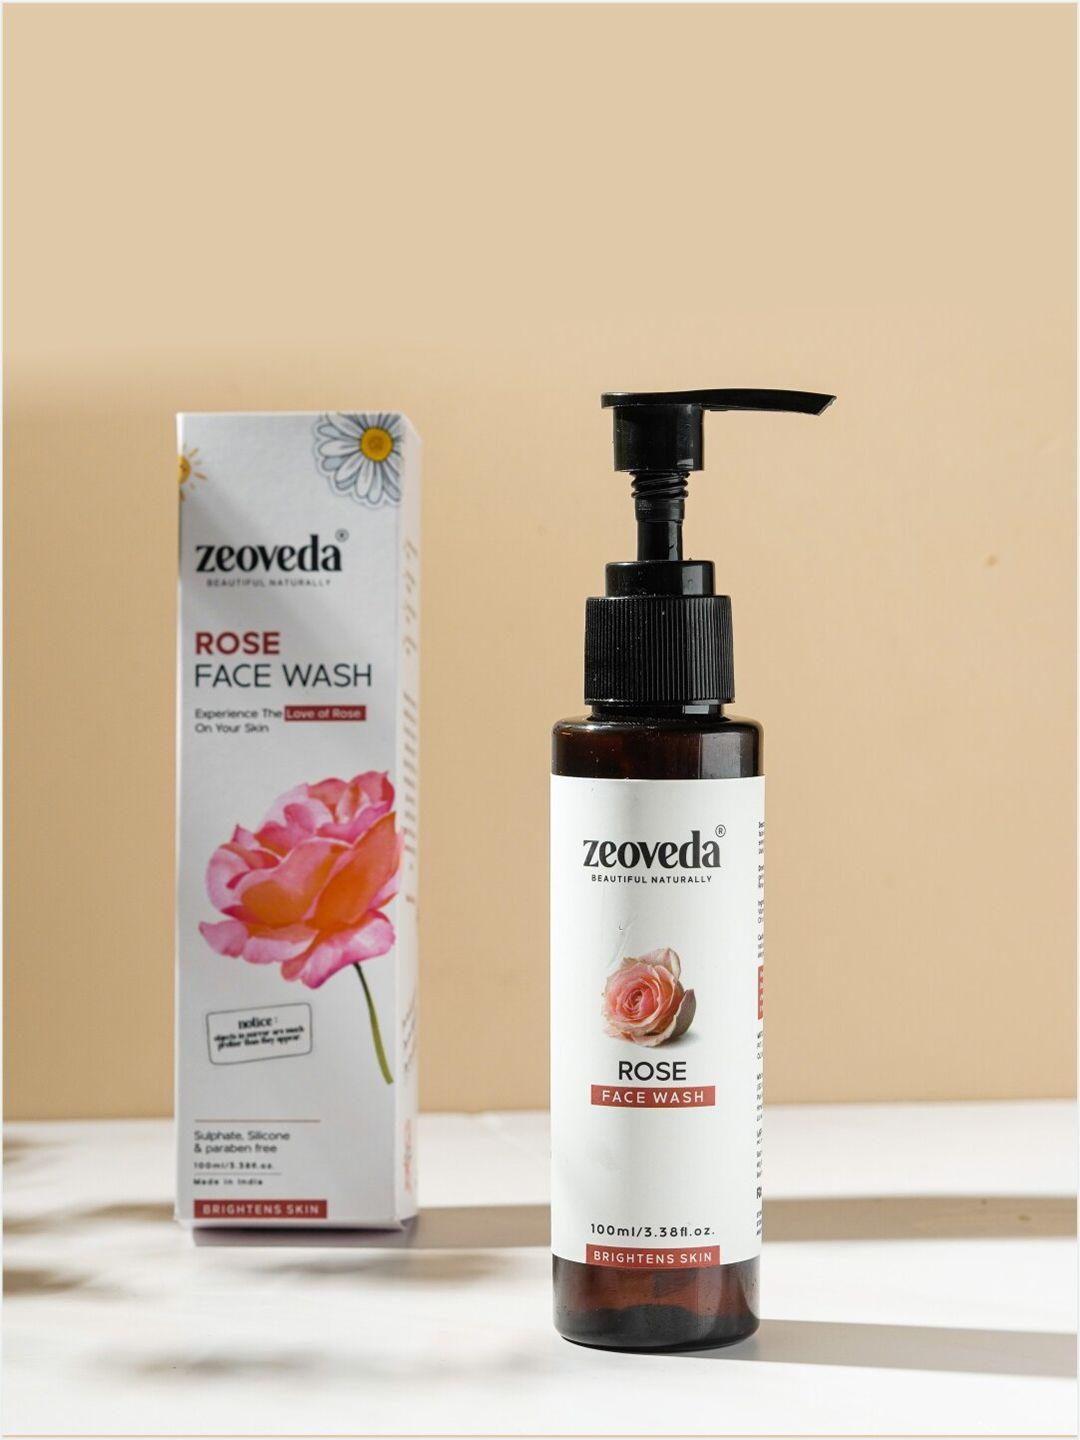 zeoveda rose face wash with jojoba oil & citric acid to brighten skin - 100ml